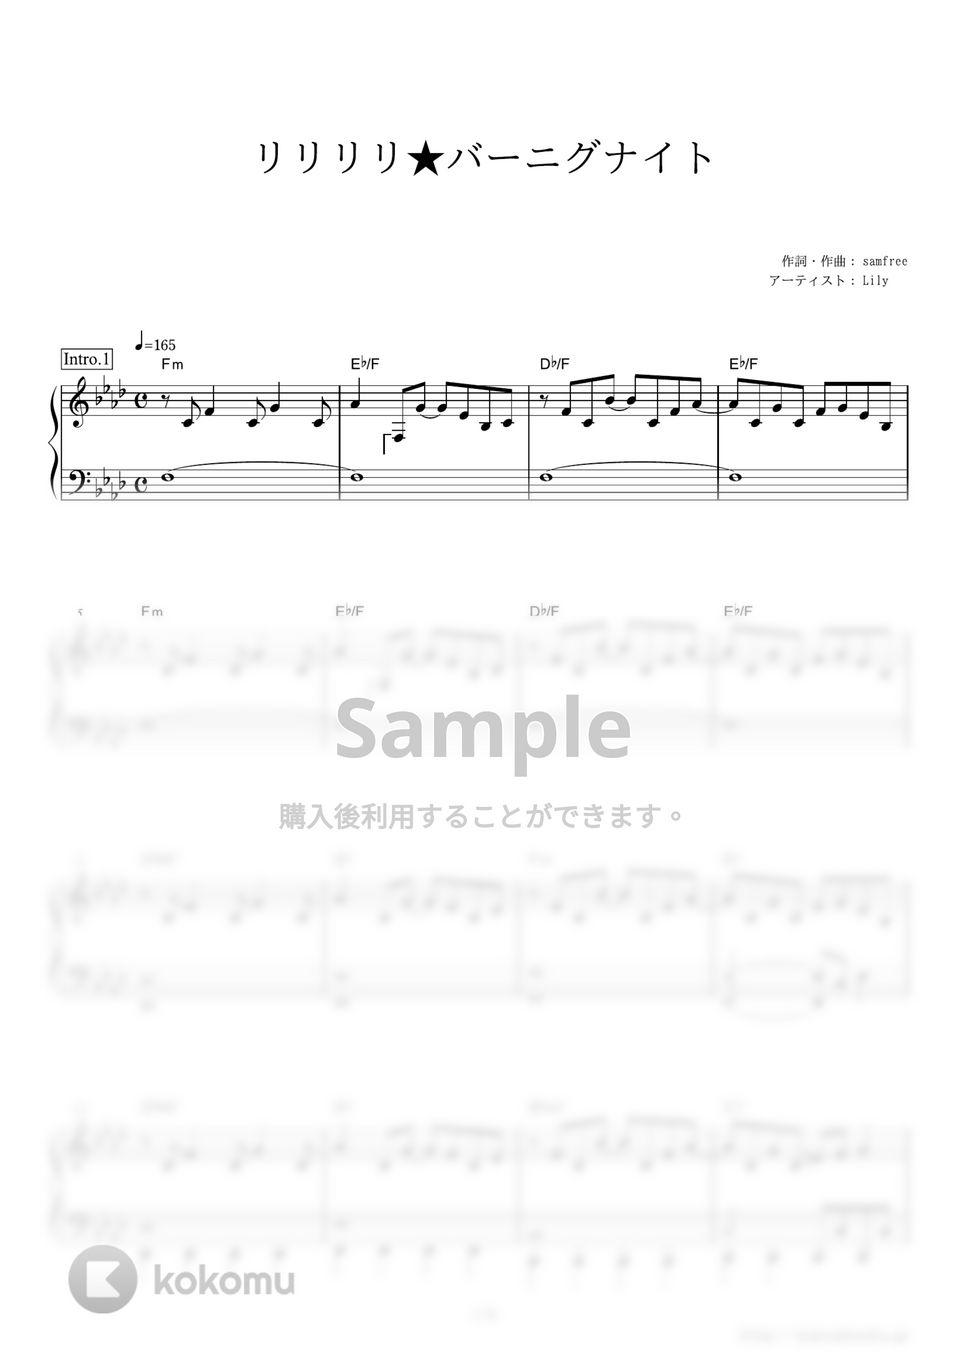 samfree - リリリリ★バーニングナイト by ピアノの本棚